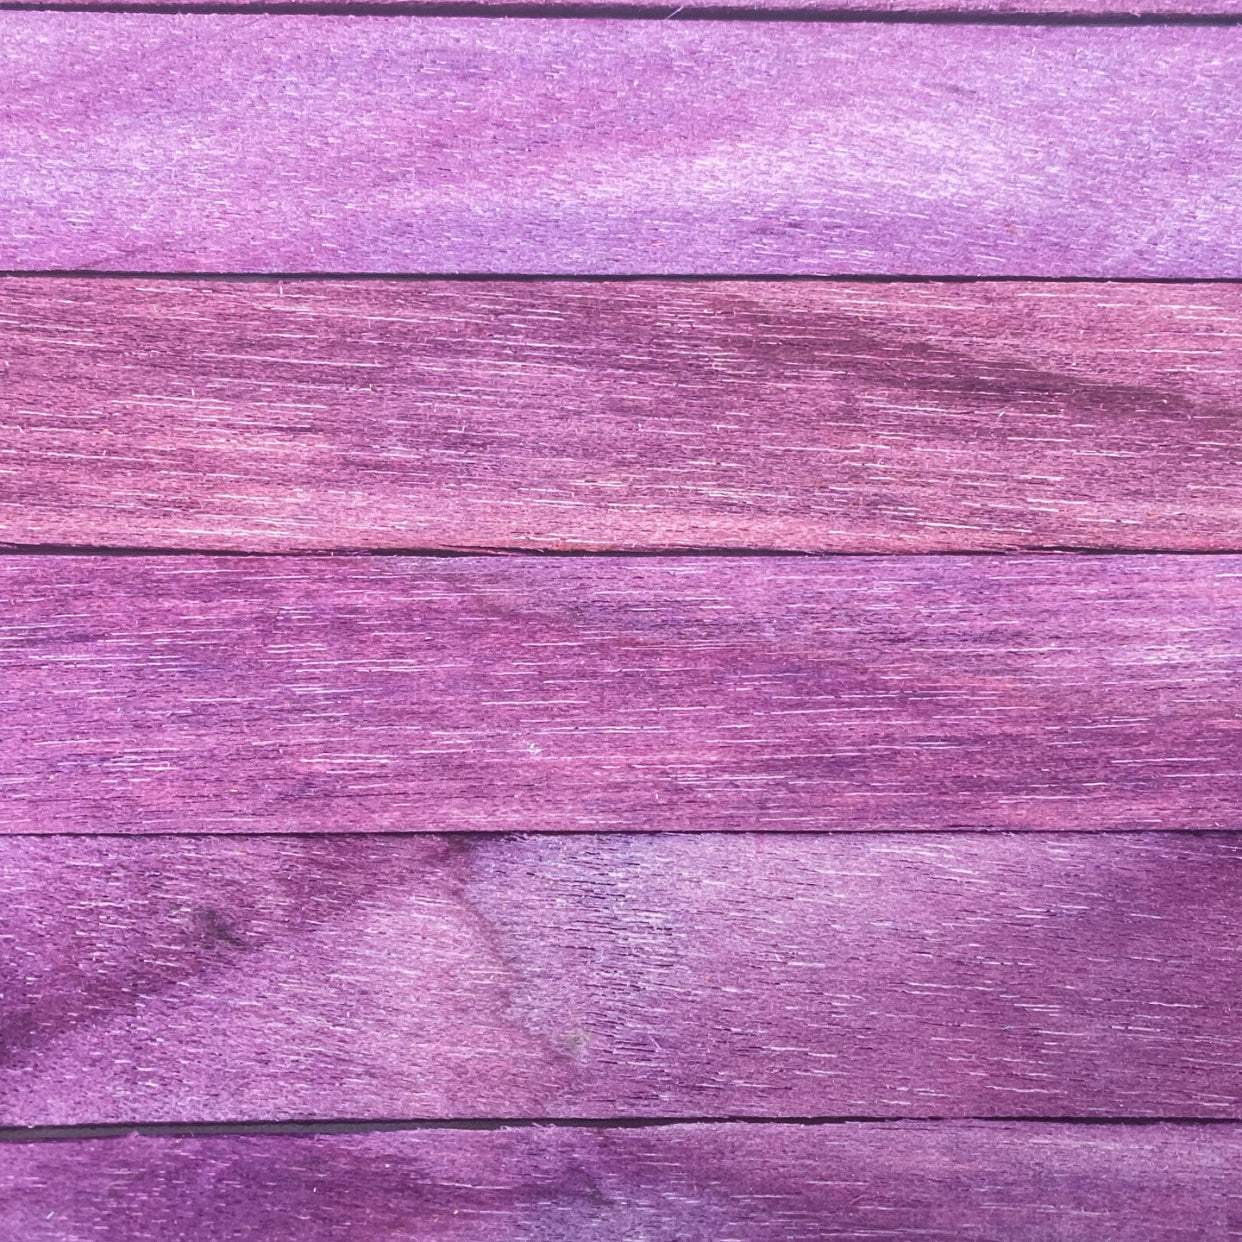 Purple Wash Wood Canvas Photography Background